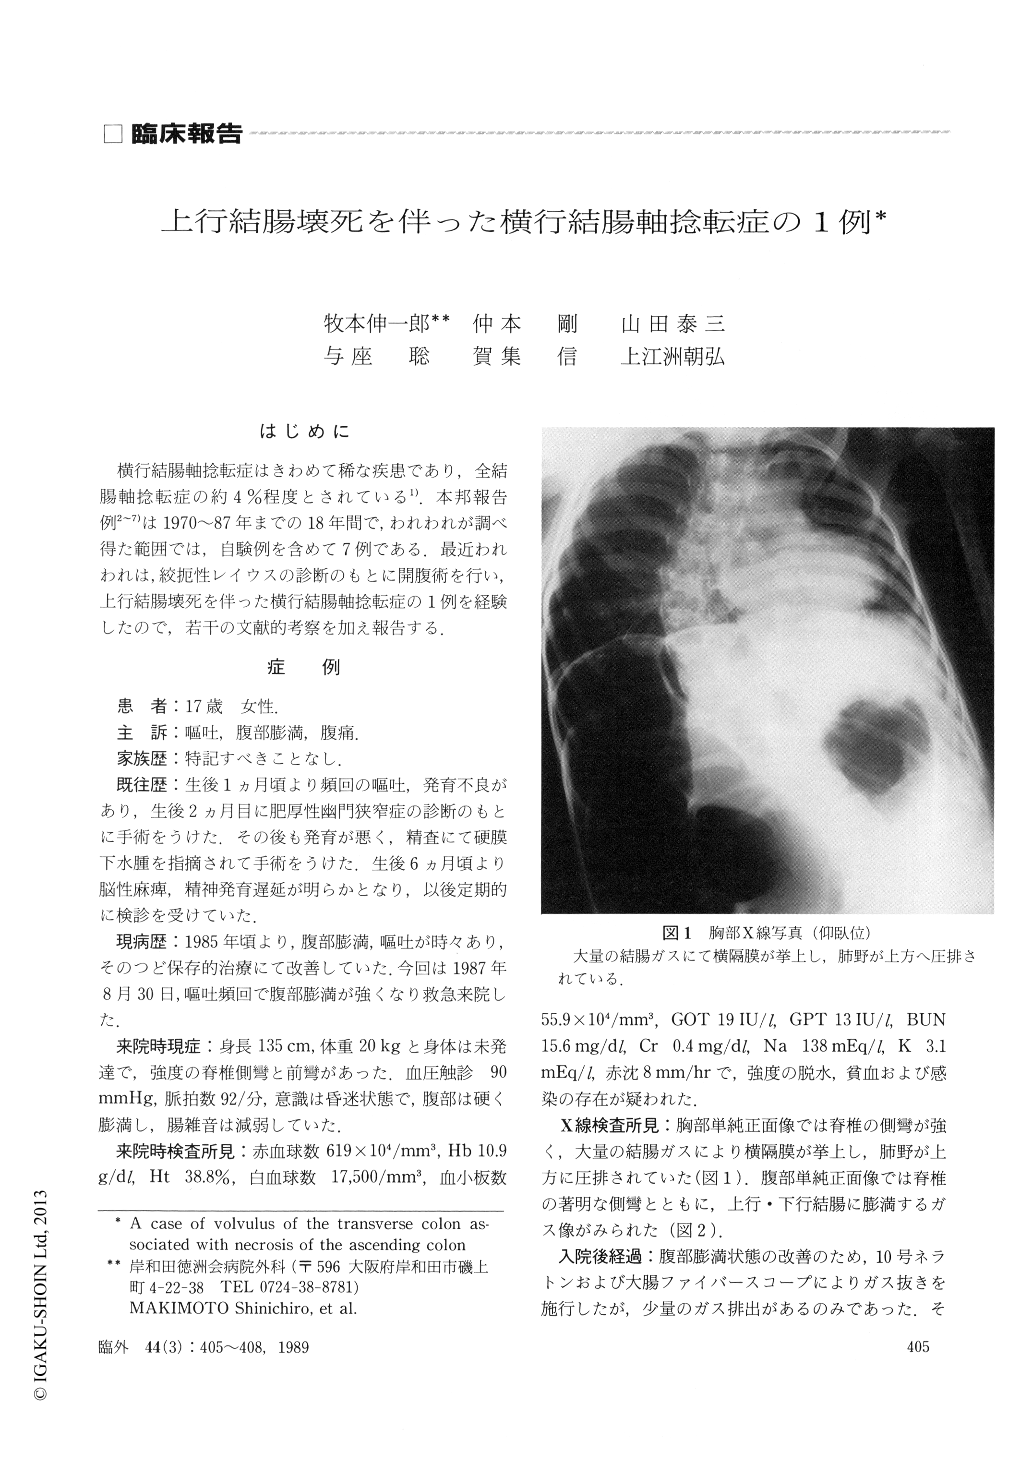 上行結腸壊死を伴った横行結腸軸捻転症の1例 臨床外科 44巻3号 医書 Jp